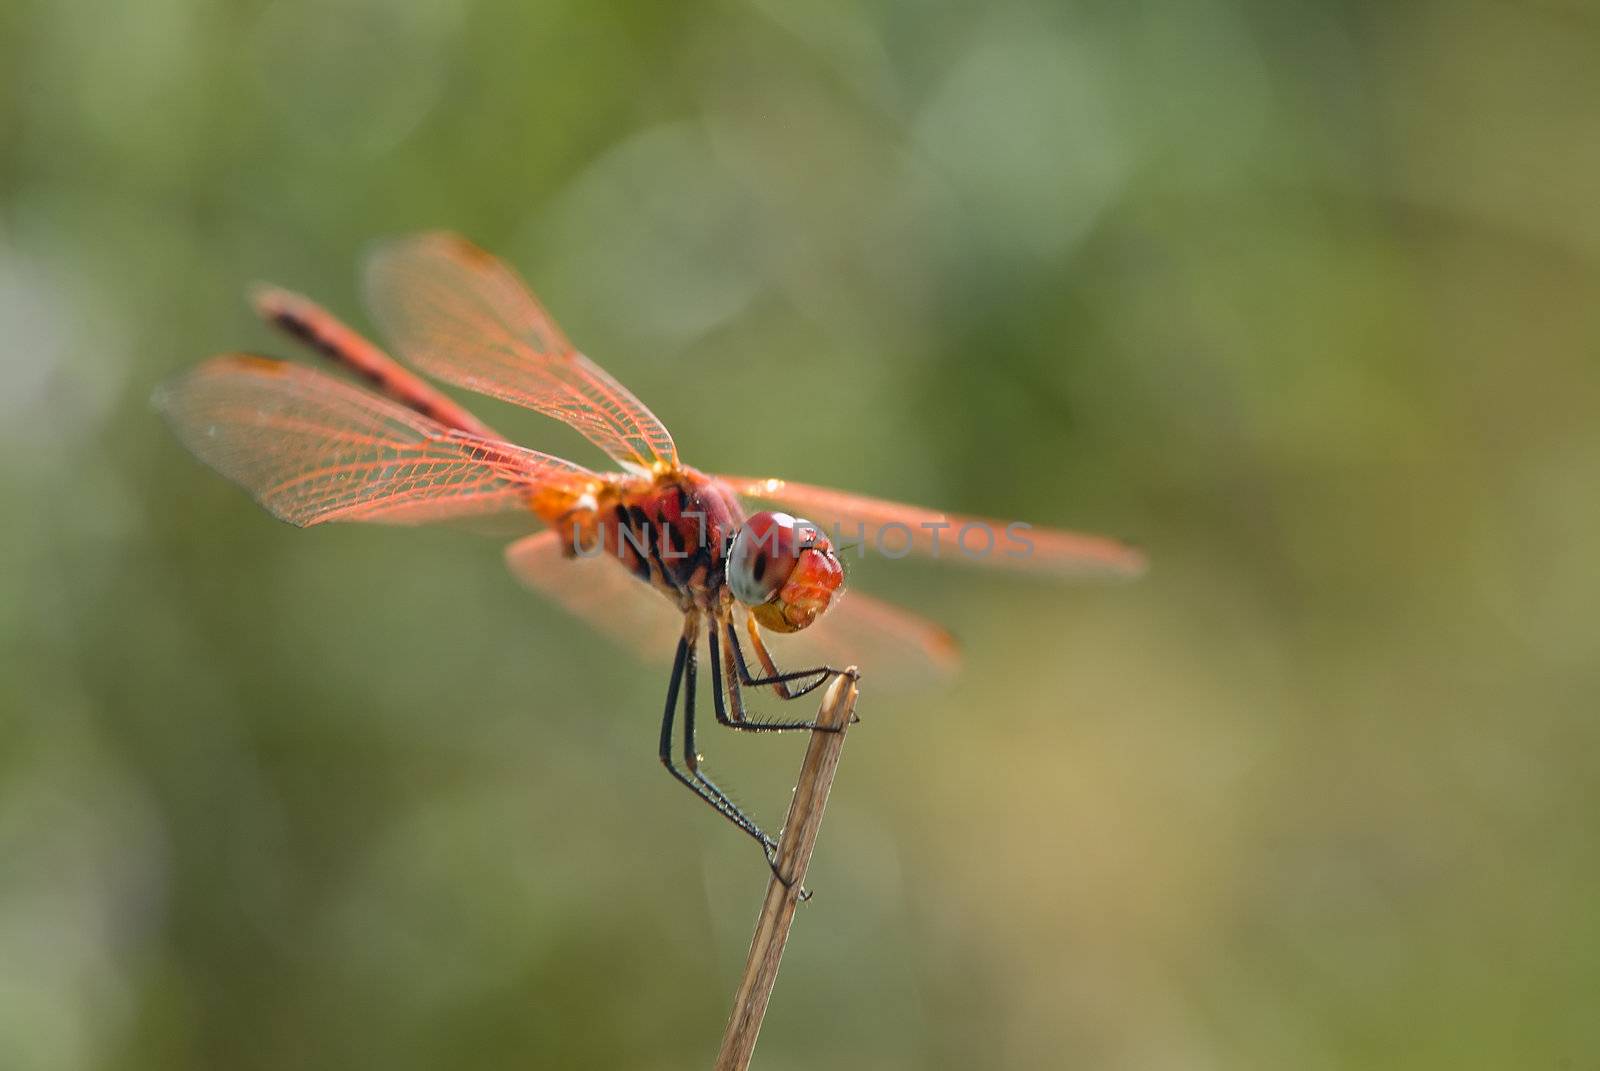 Dragonfly on twig by noam